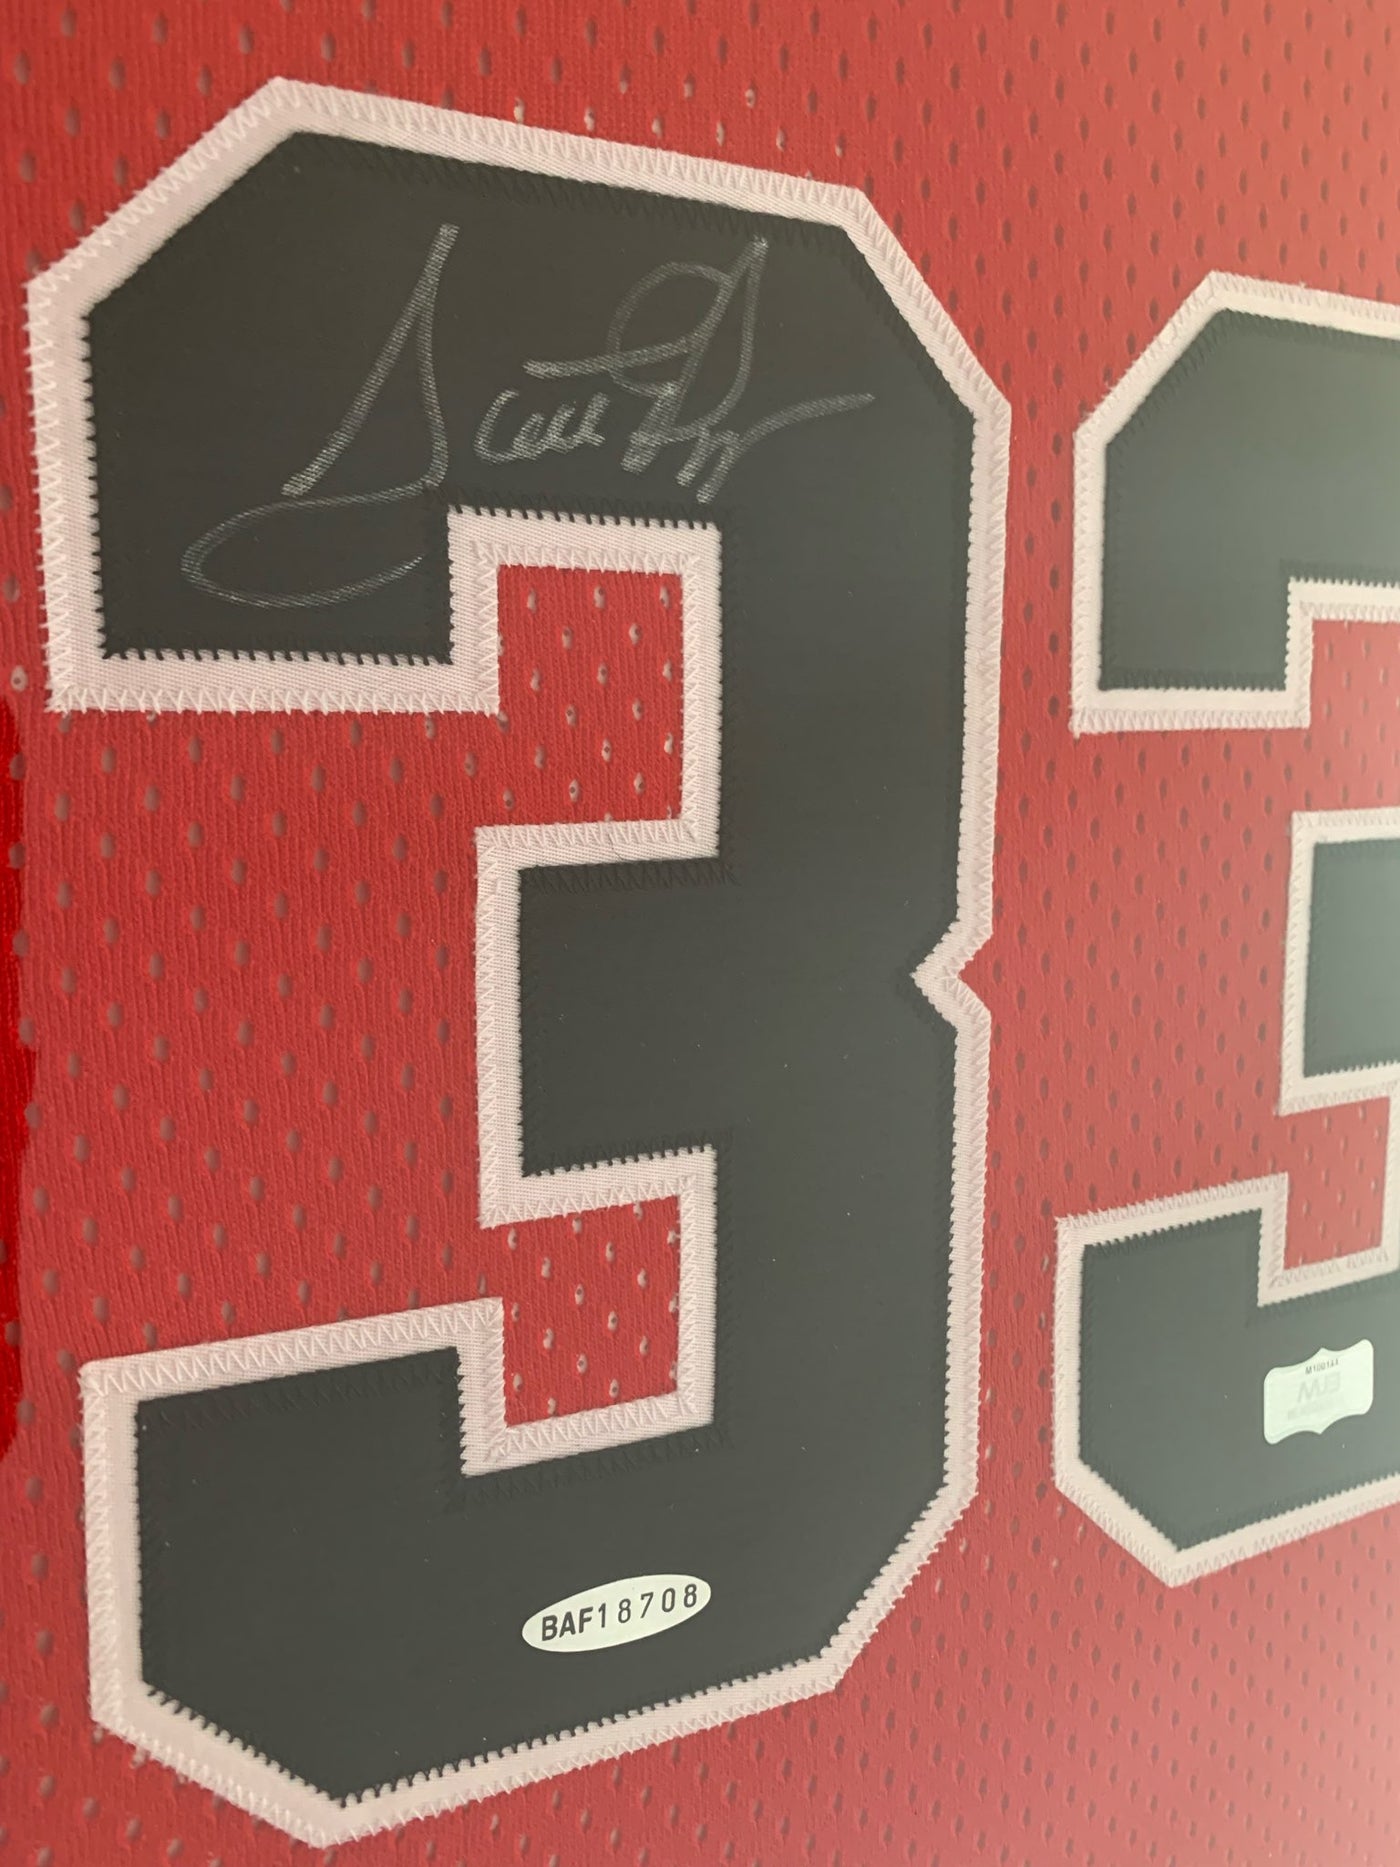 Scottie Pippen Signed Chicago Bulls Jersey Upper Deck Authentication